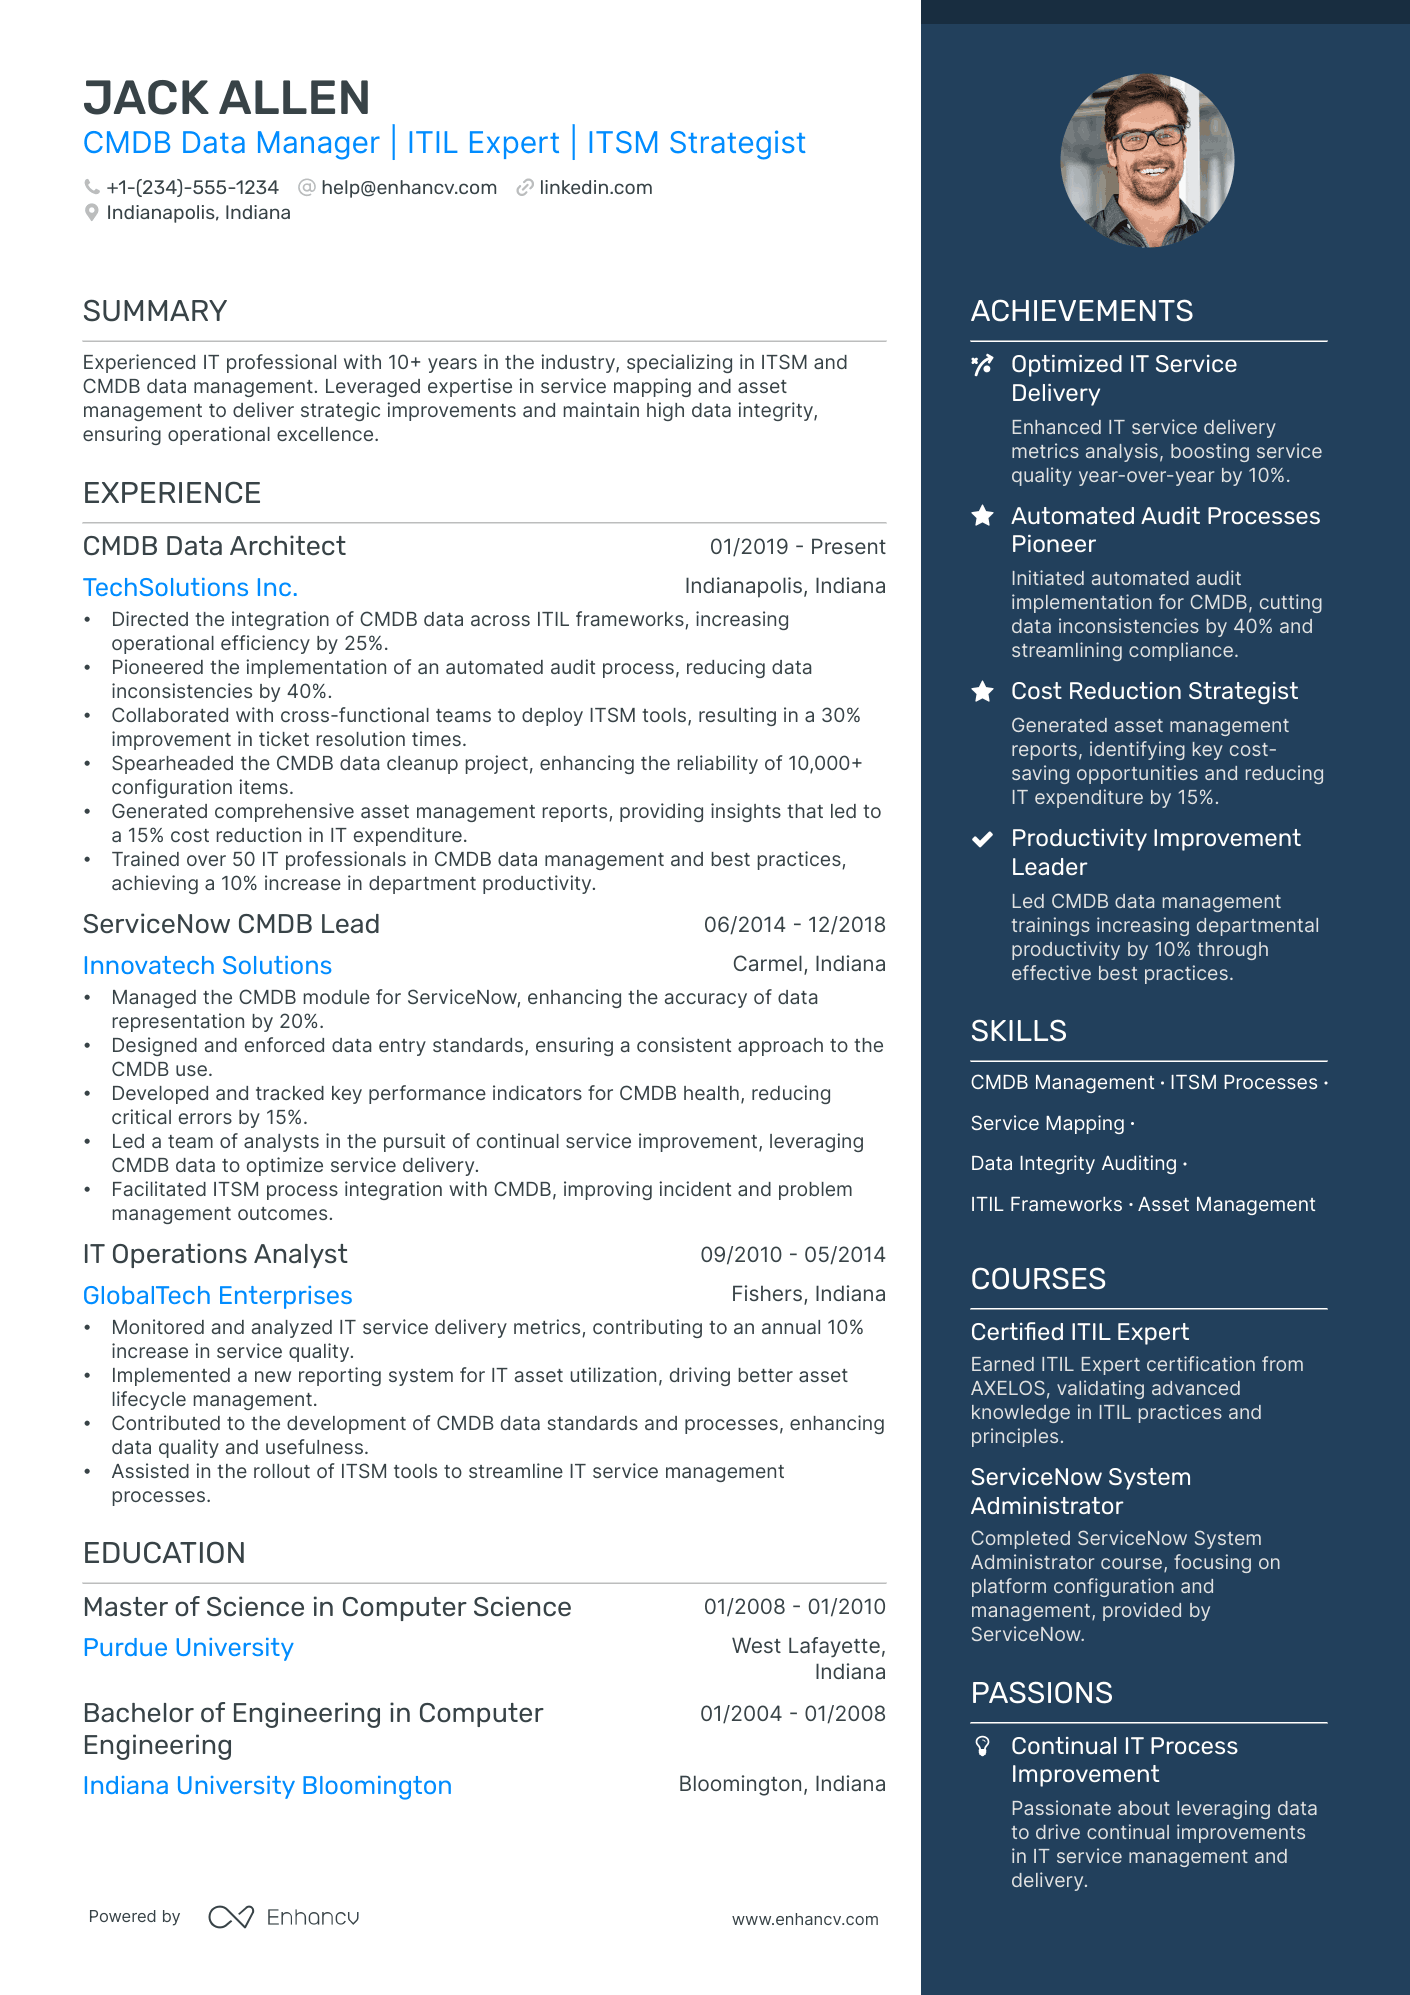 servicenow resume